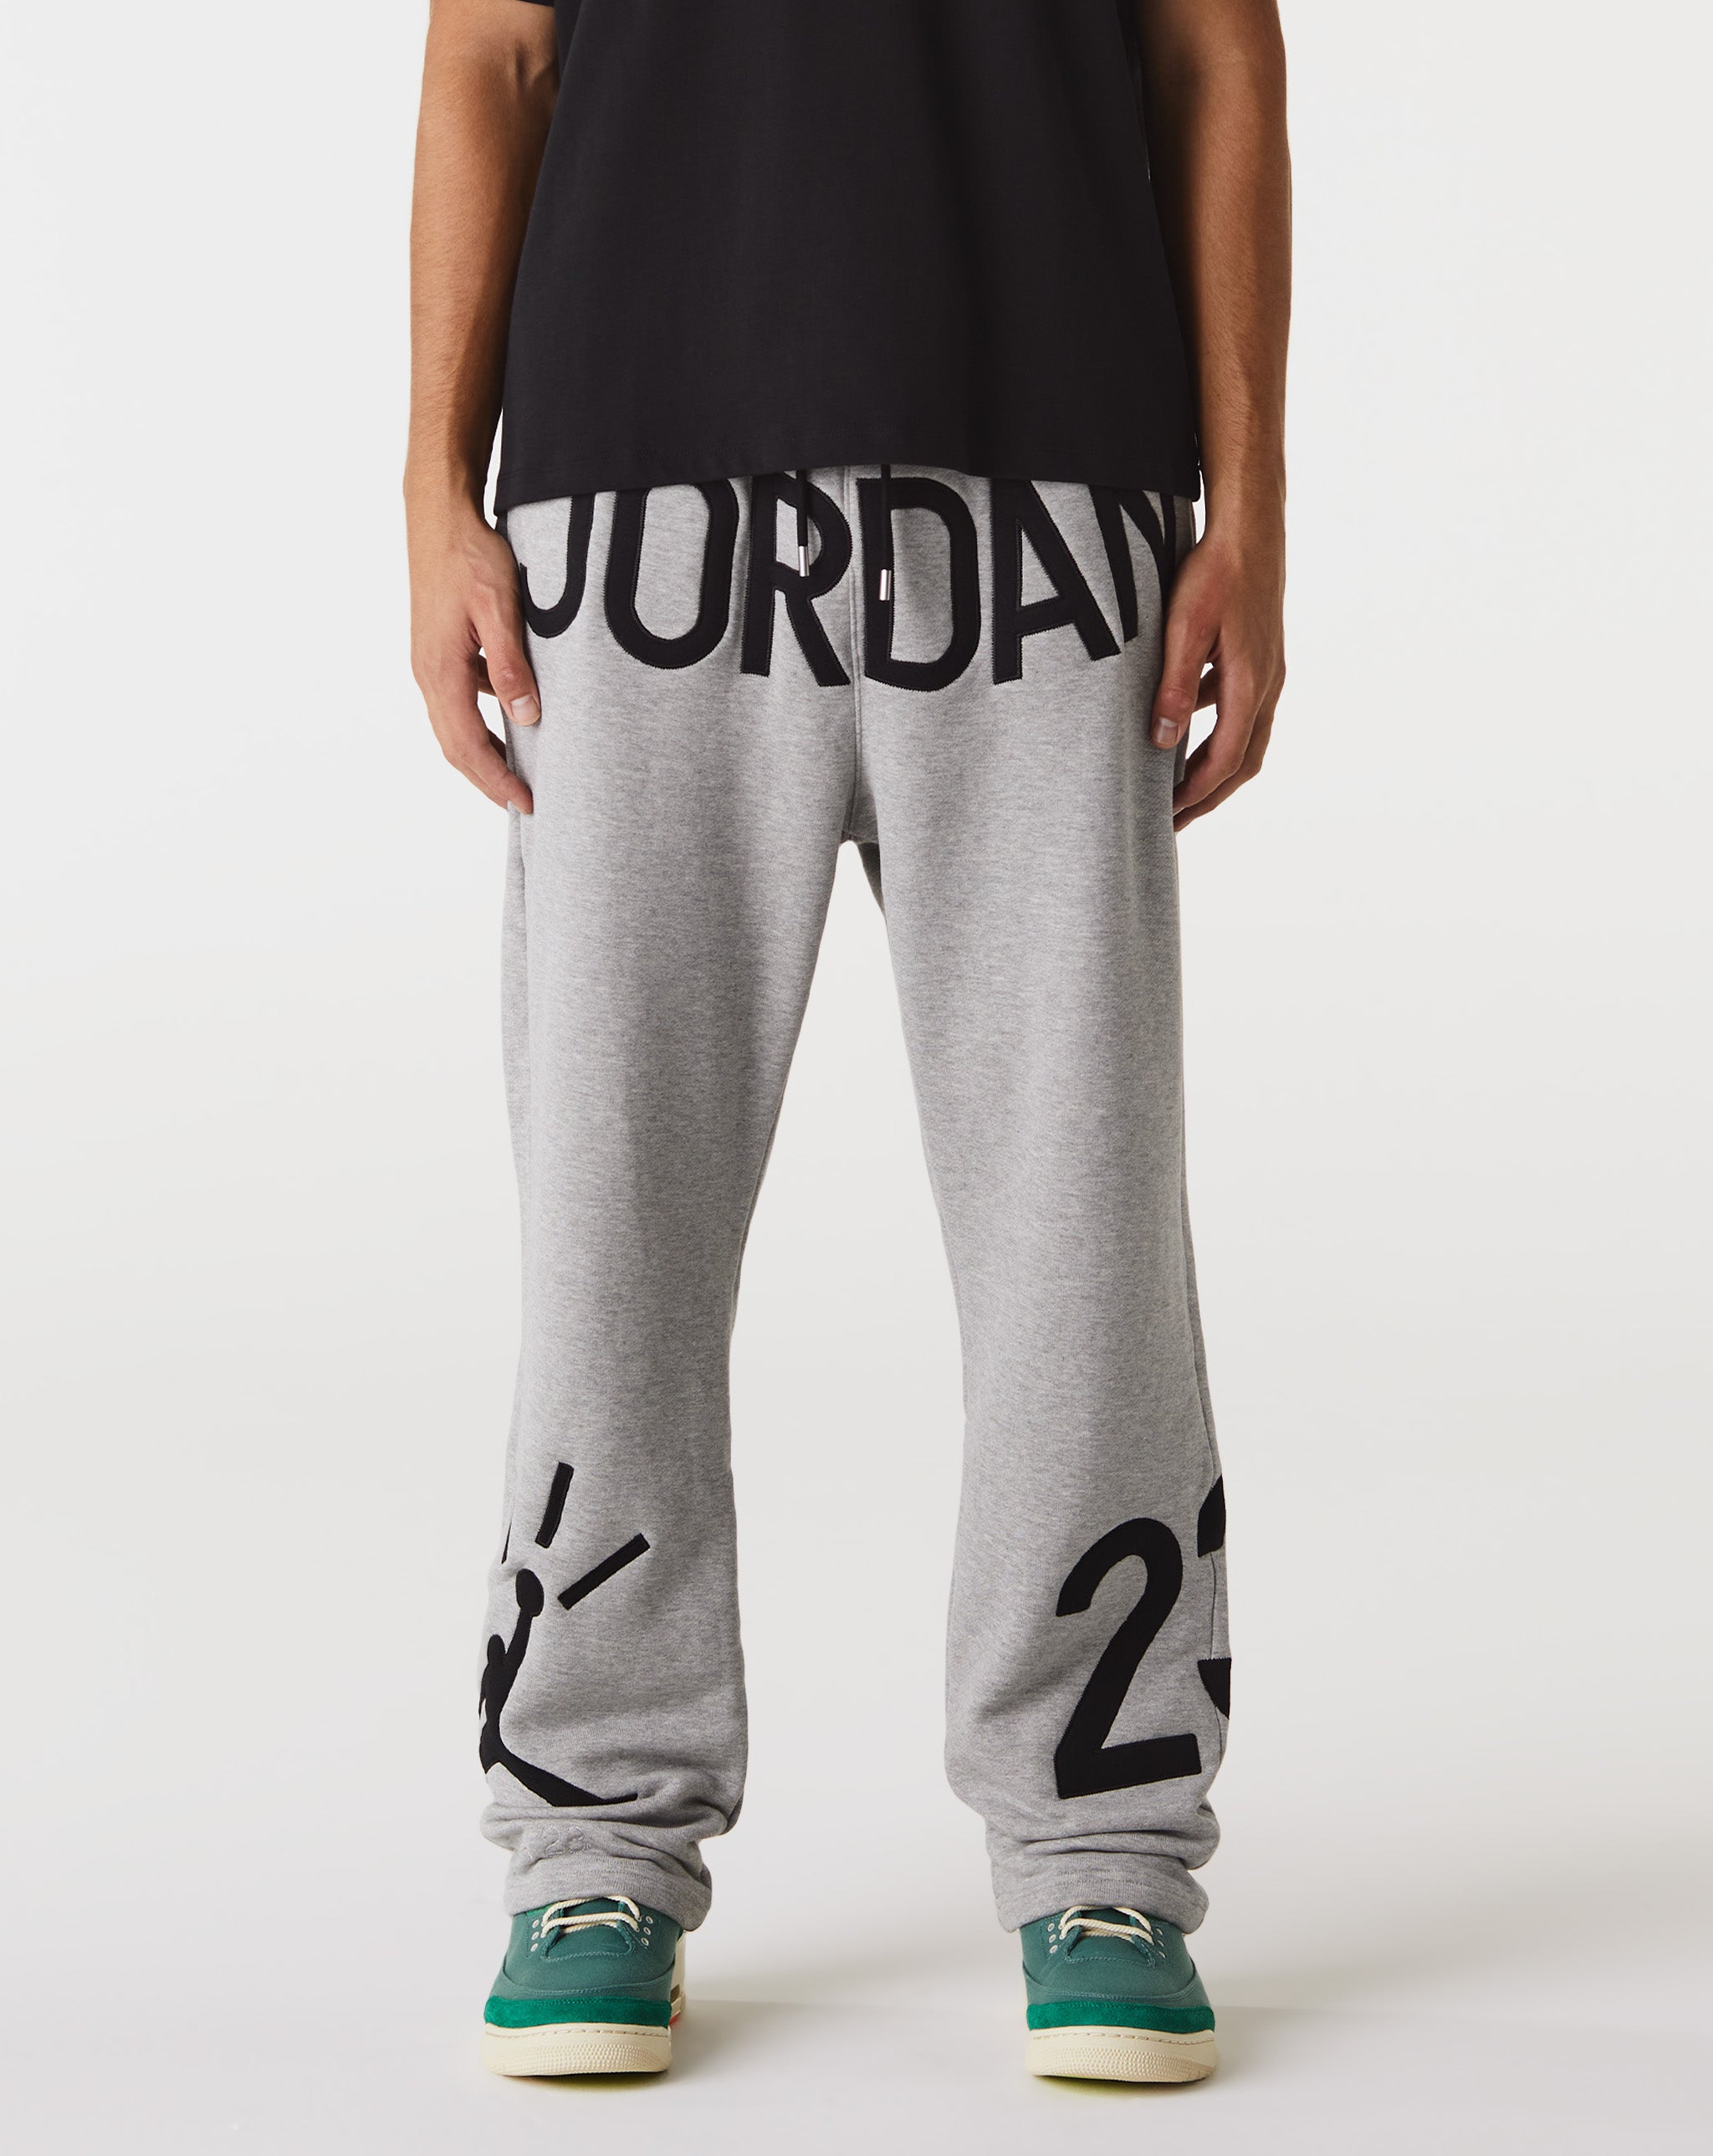 Air Jordan Nina Chanel Abney x Sweatpants  - Cheap Cerbe Jordan outlet